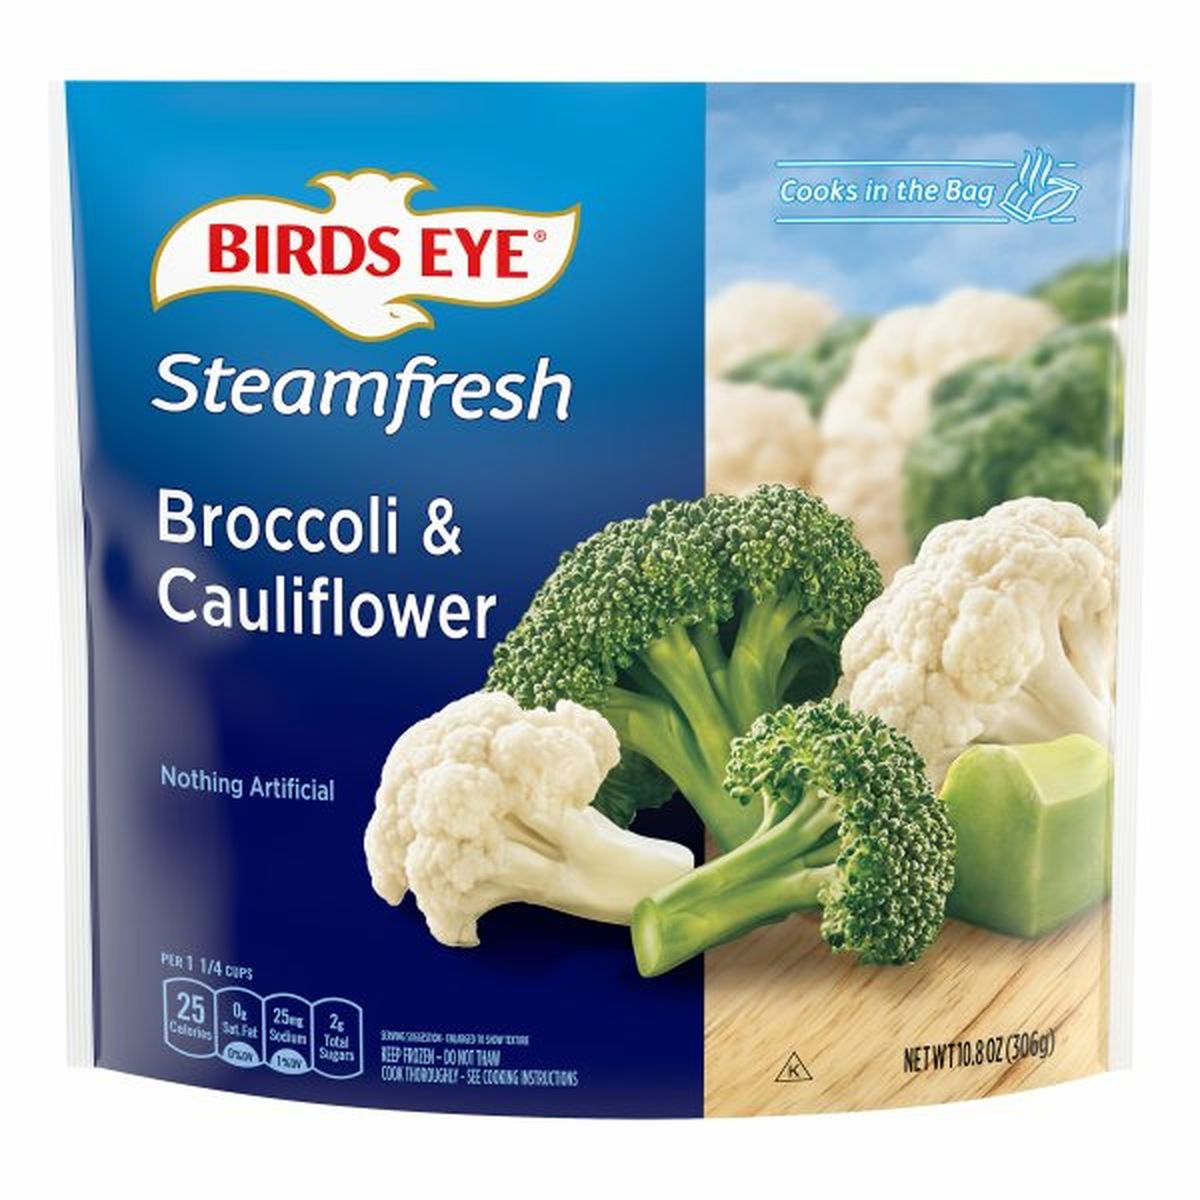 Calories in Birds Eye Steamfresh Broccoli & Cauliflower